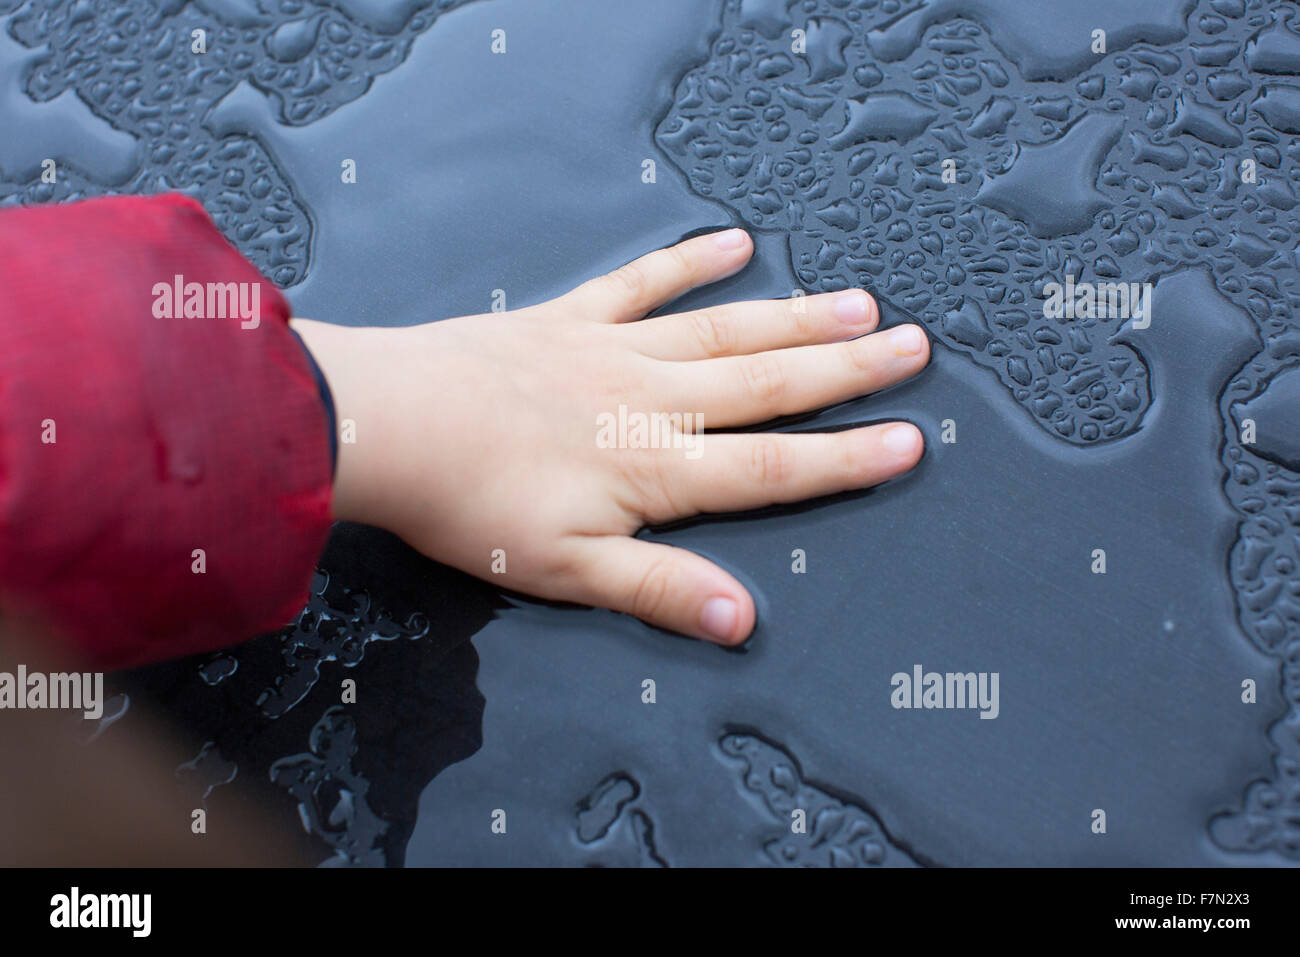 Child touching wet metallic surface Stock Photo